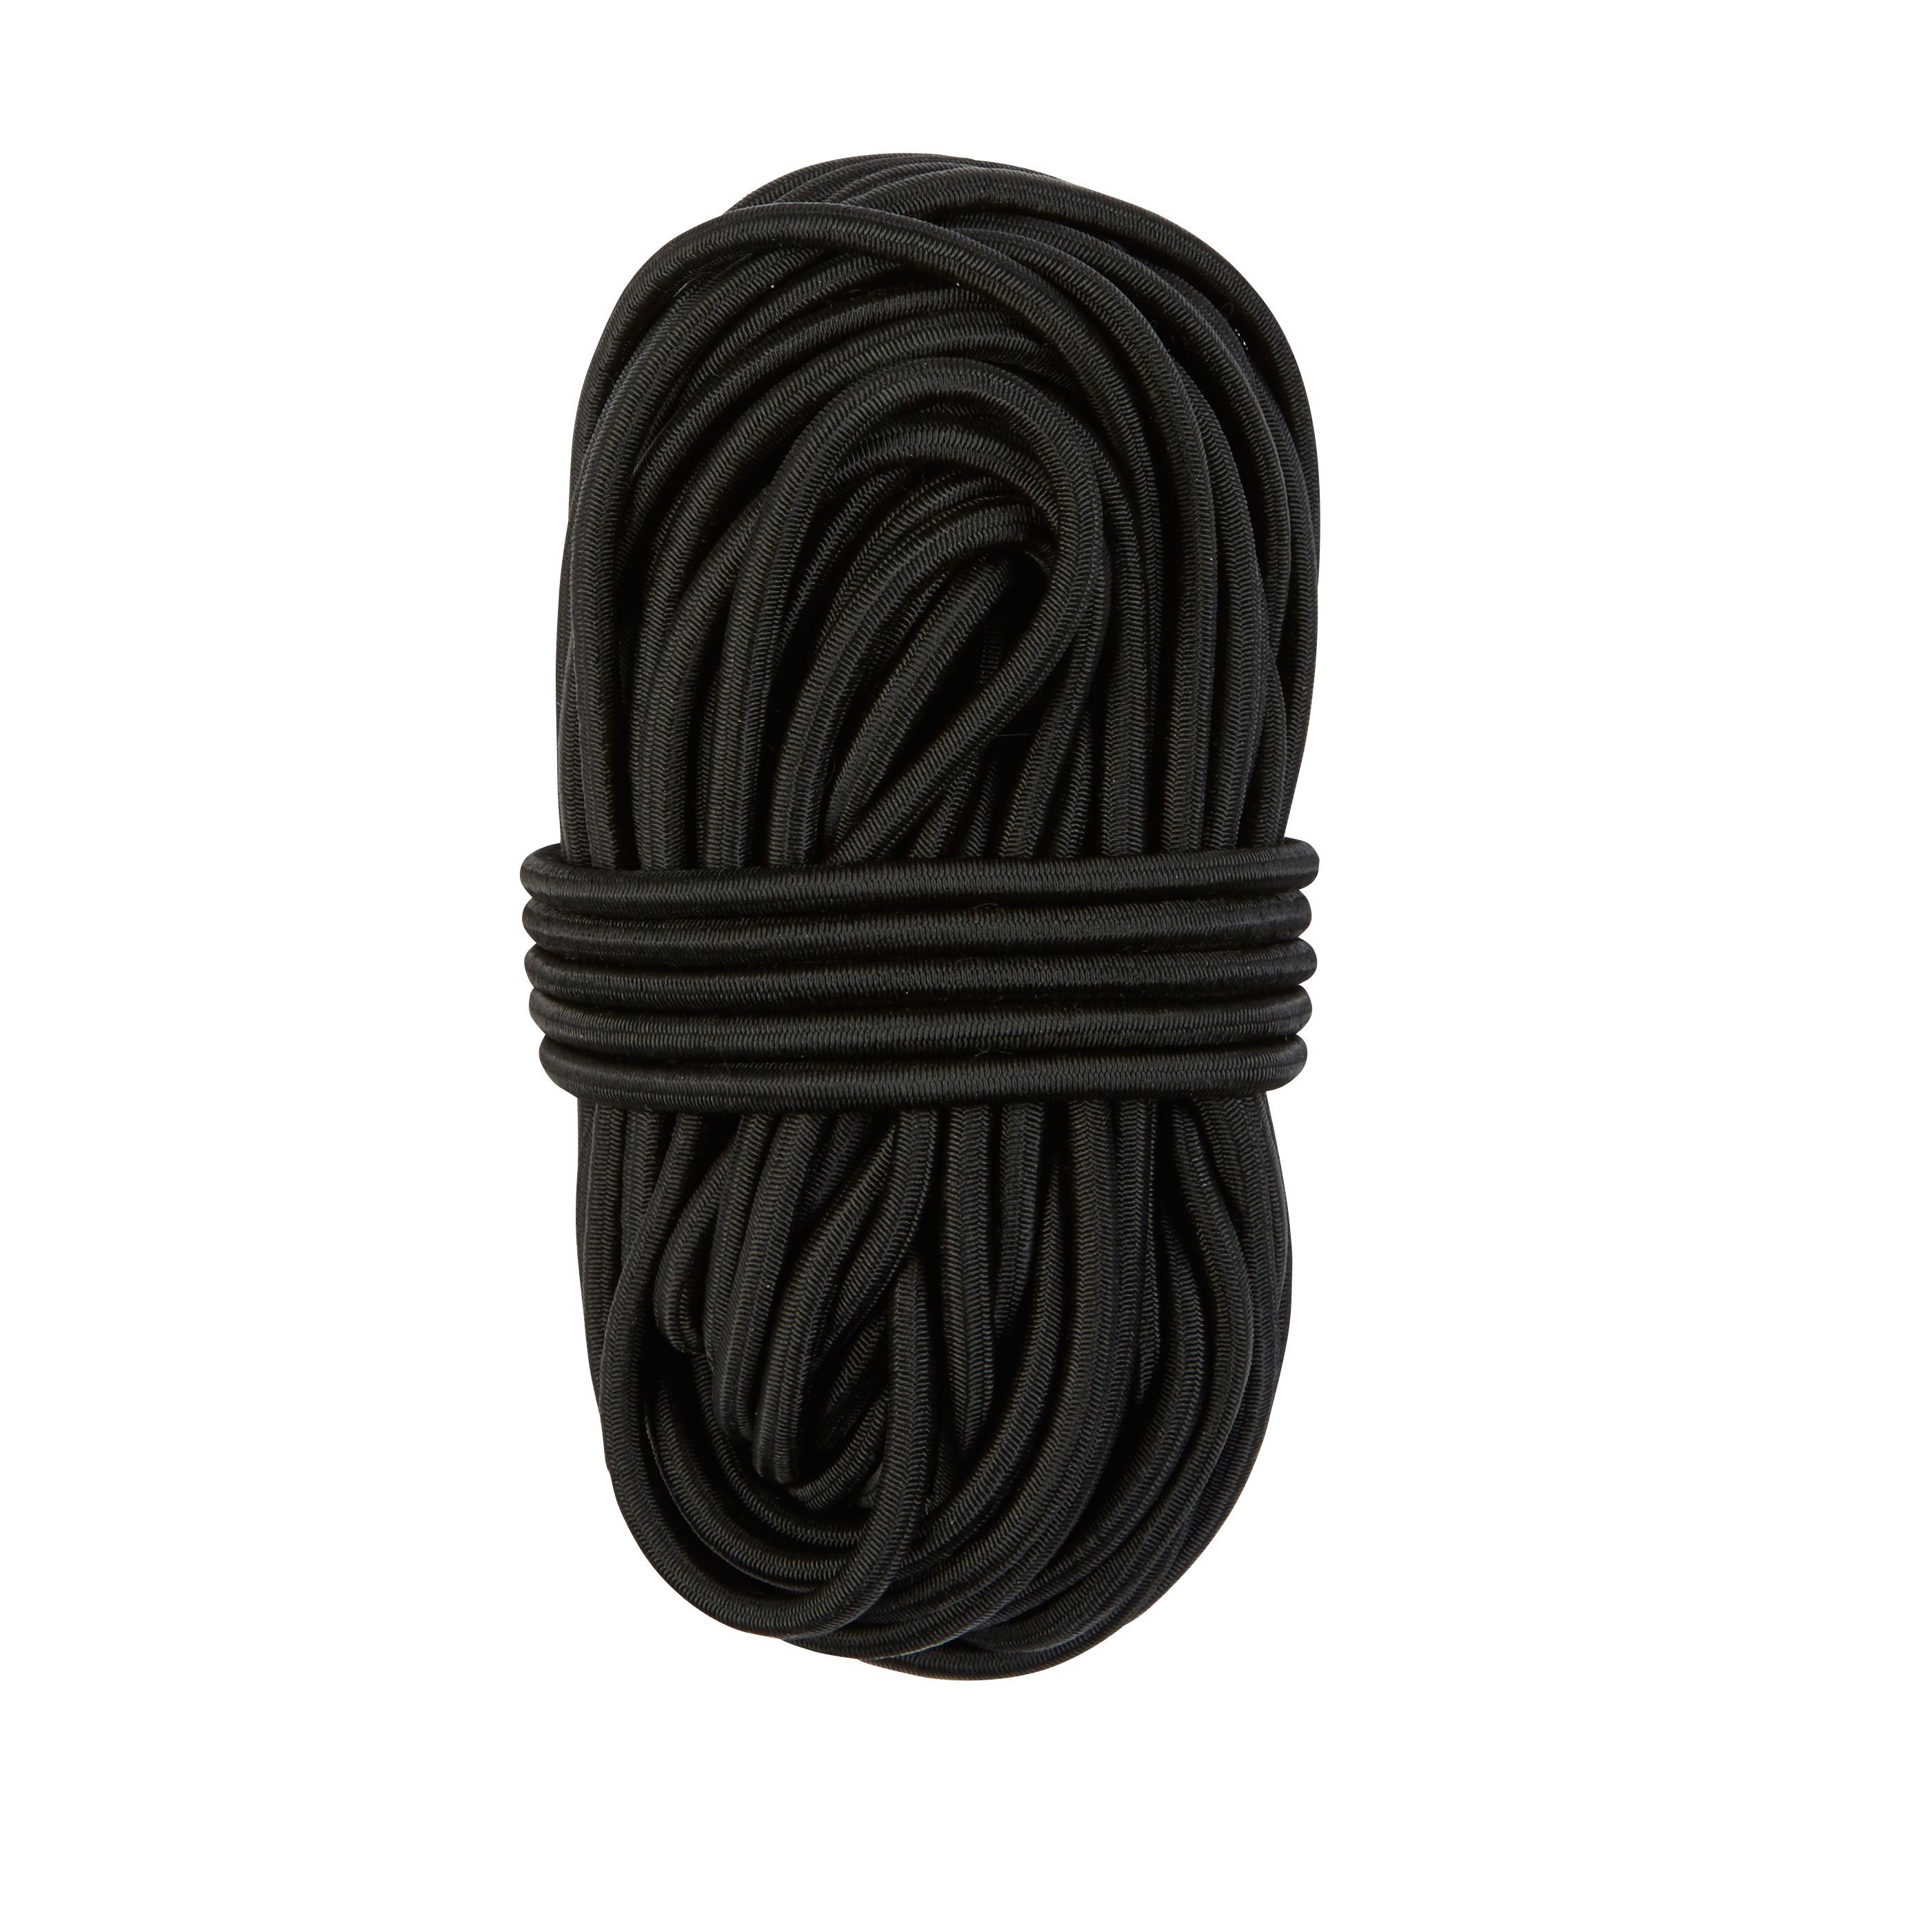 4 meter black elastic cord for DIY masks